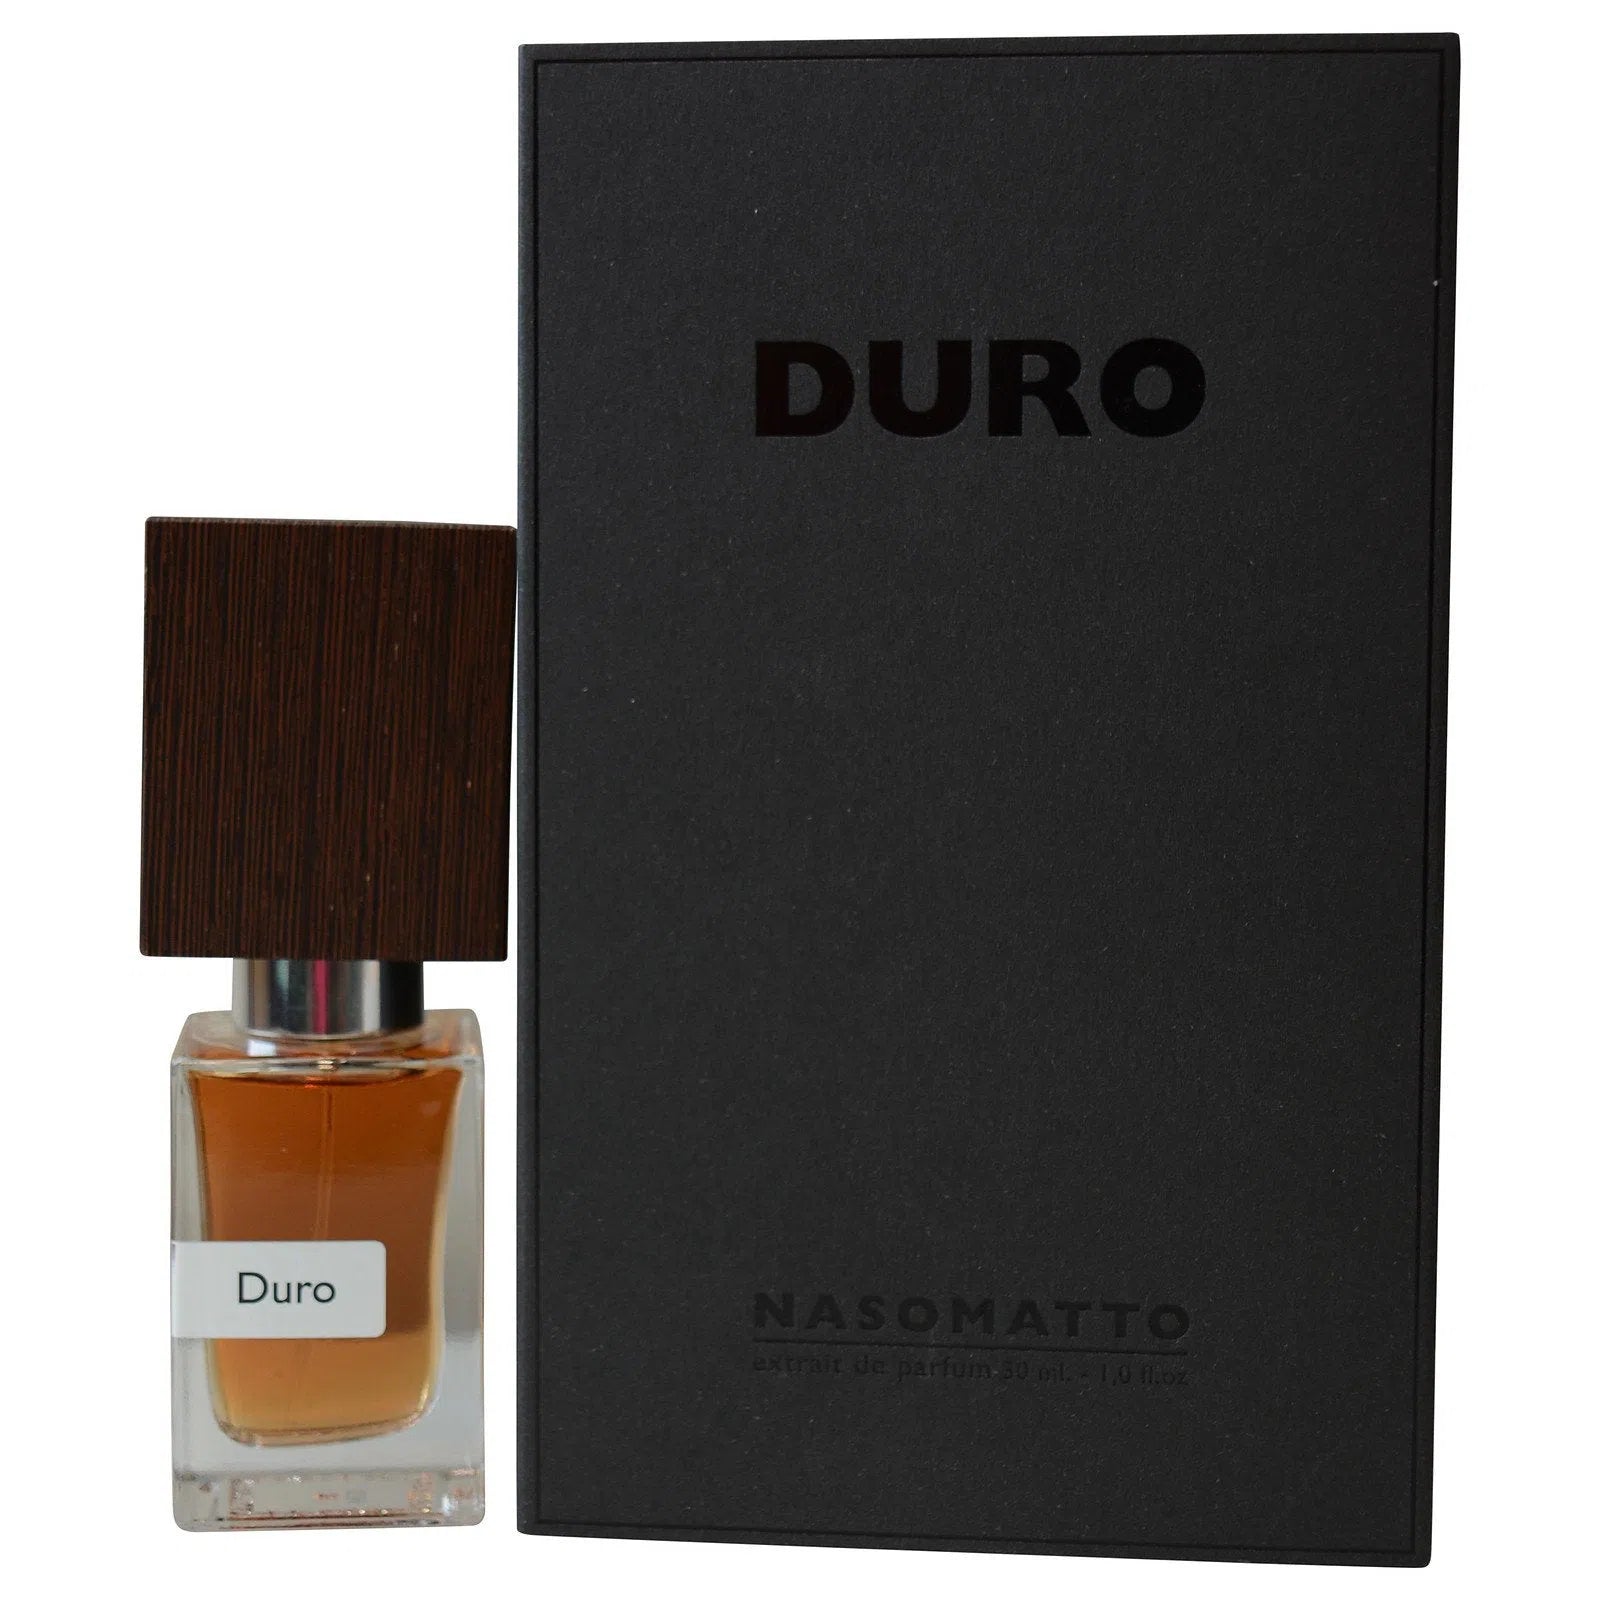 Perfume Nasomatto Duro Parfum (U) / 30 ml - 8717774840009- Prive Perfumes Honduras